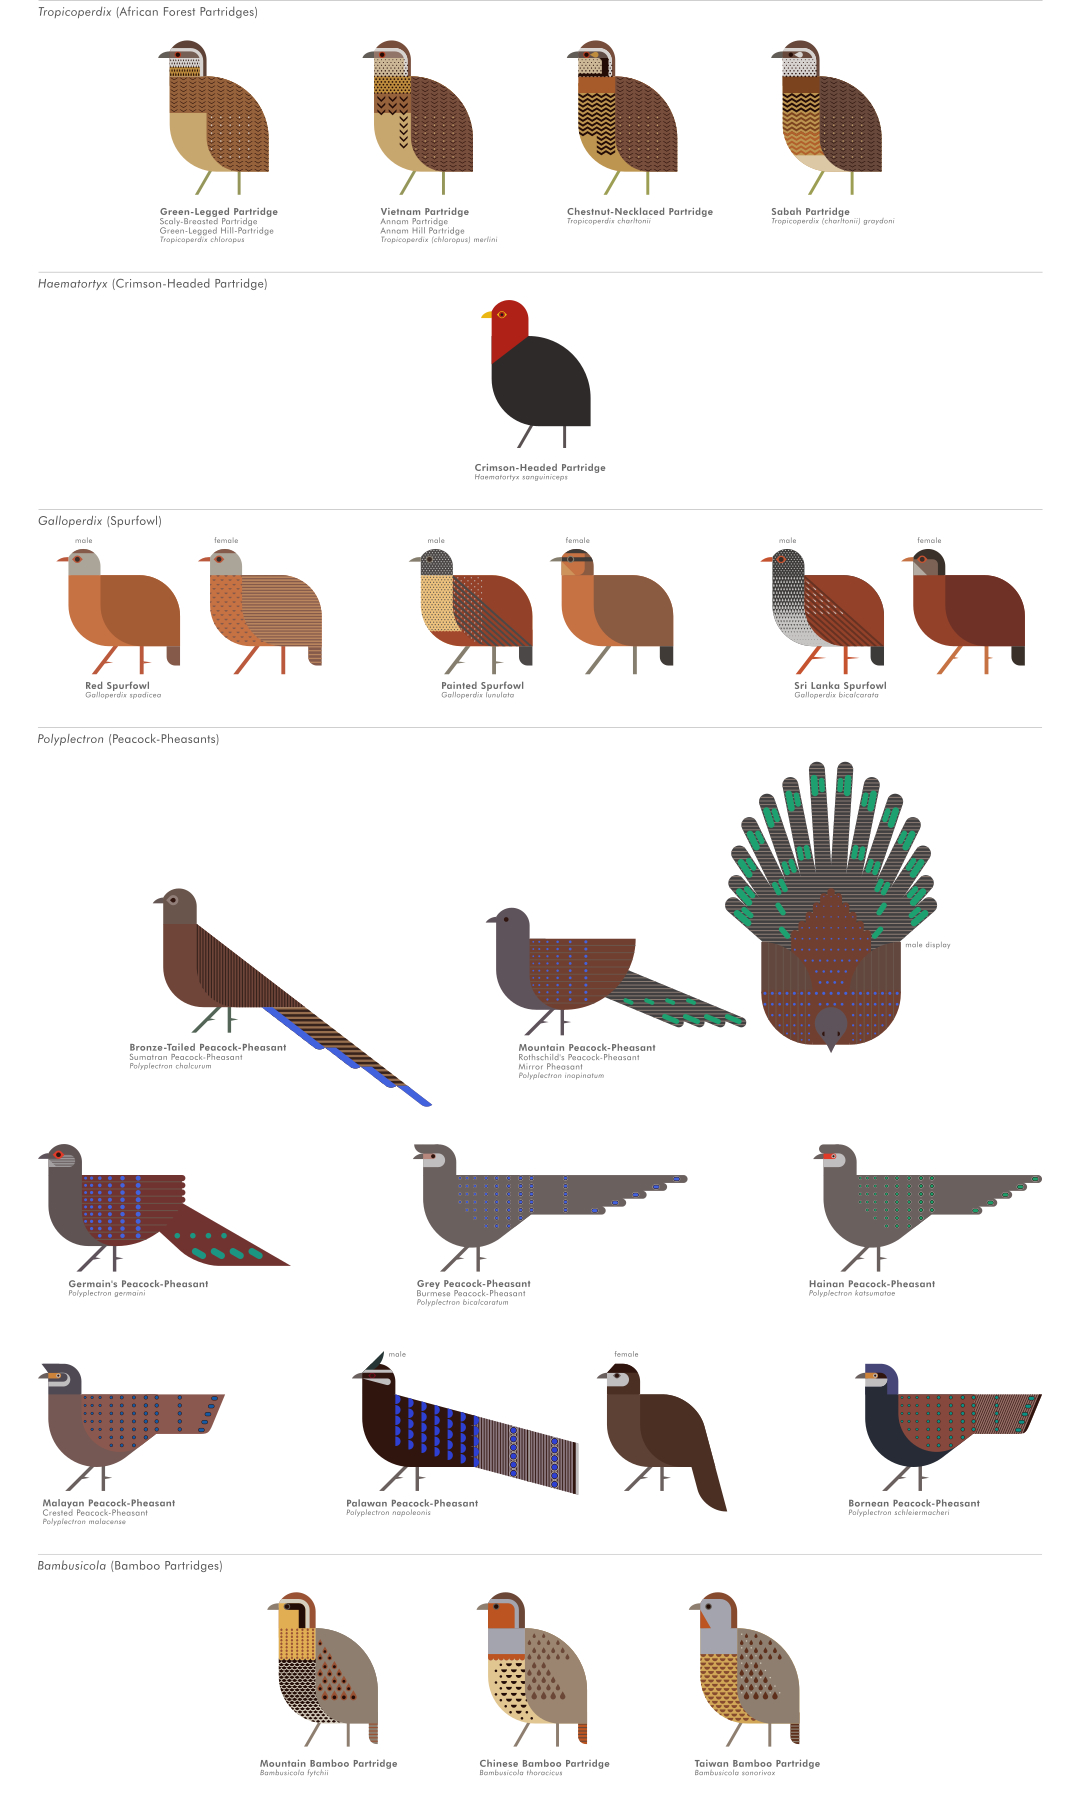 scott partridge - ave - avian vector encyclopedia - phasianidae - bird vector art